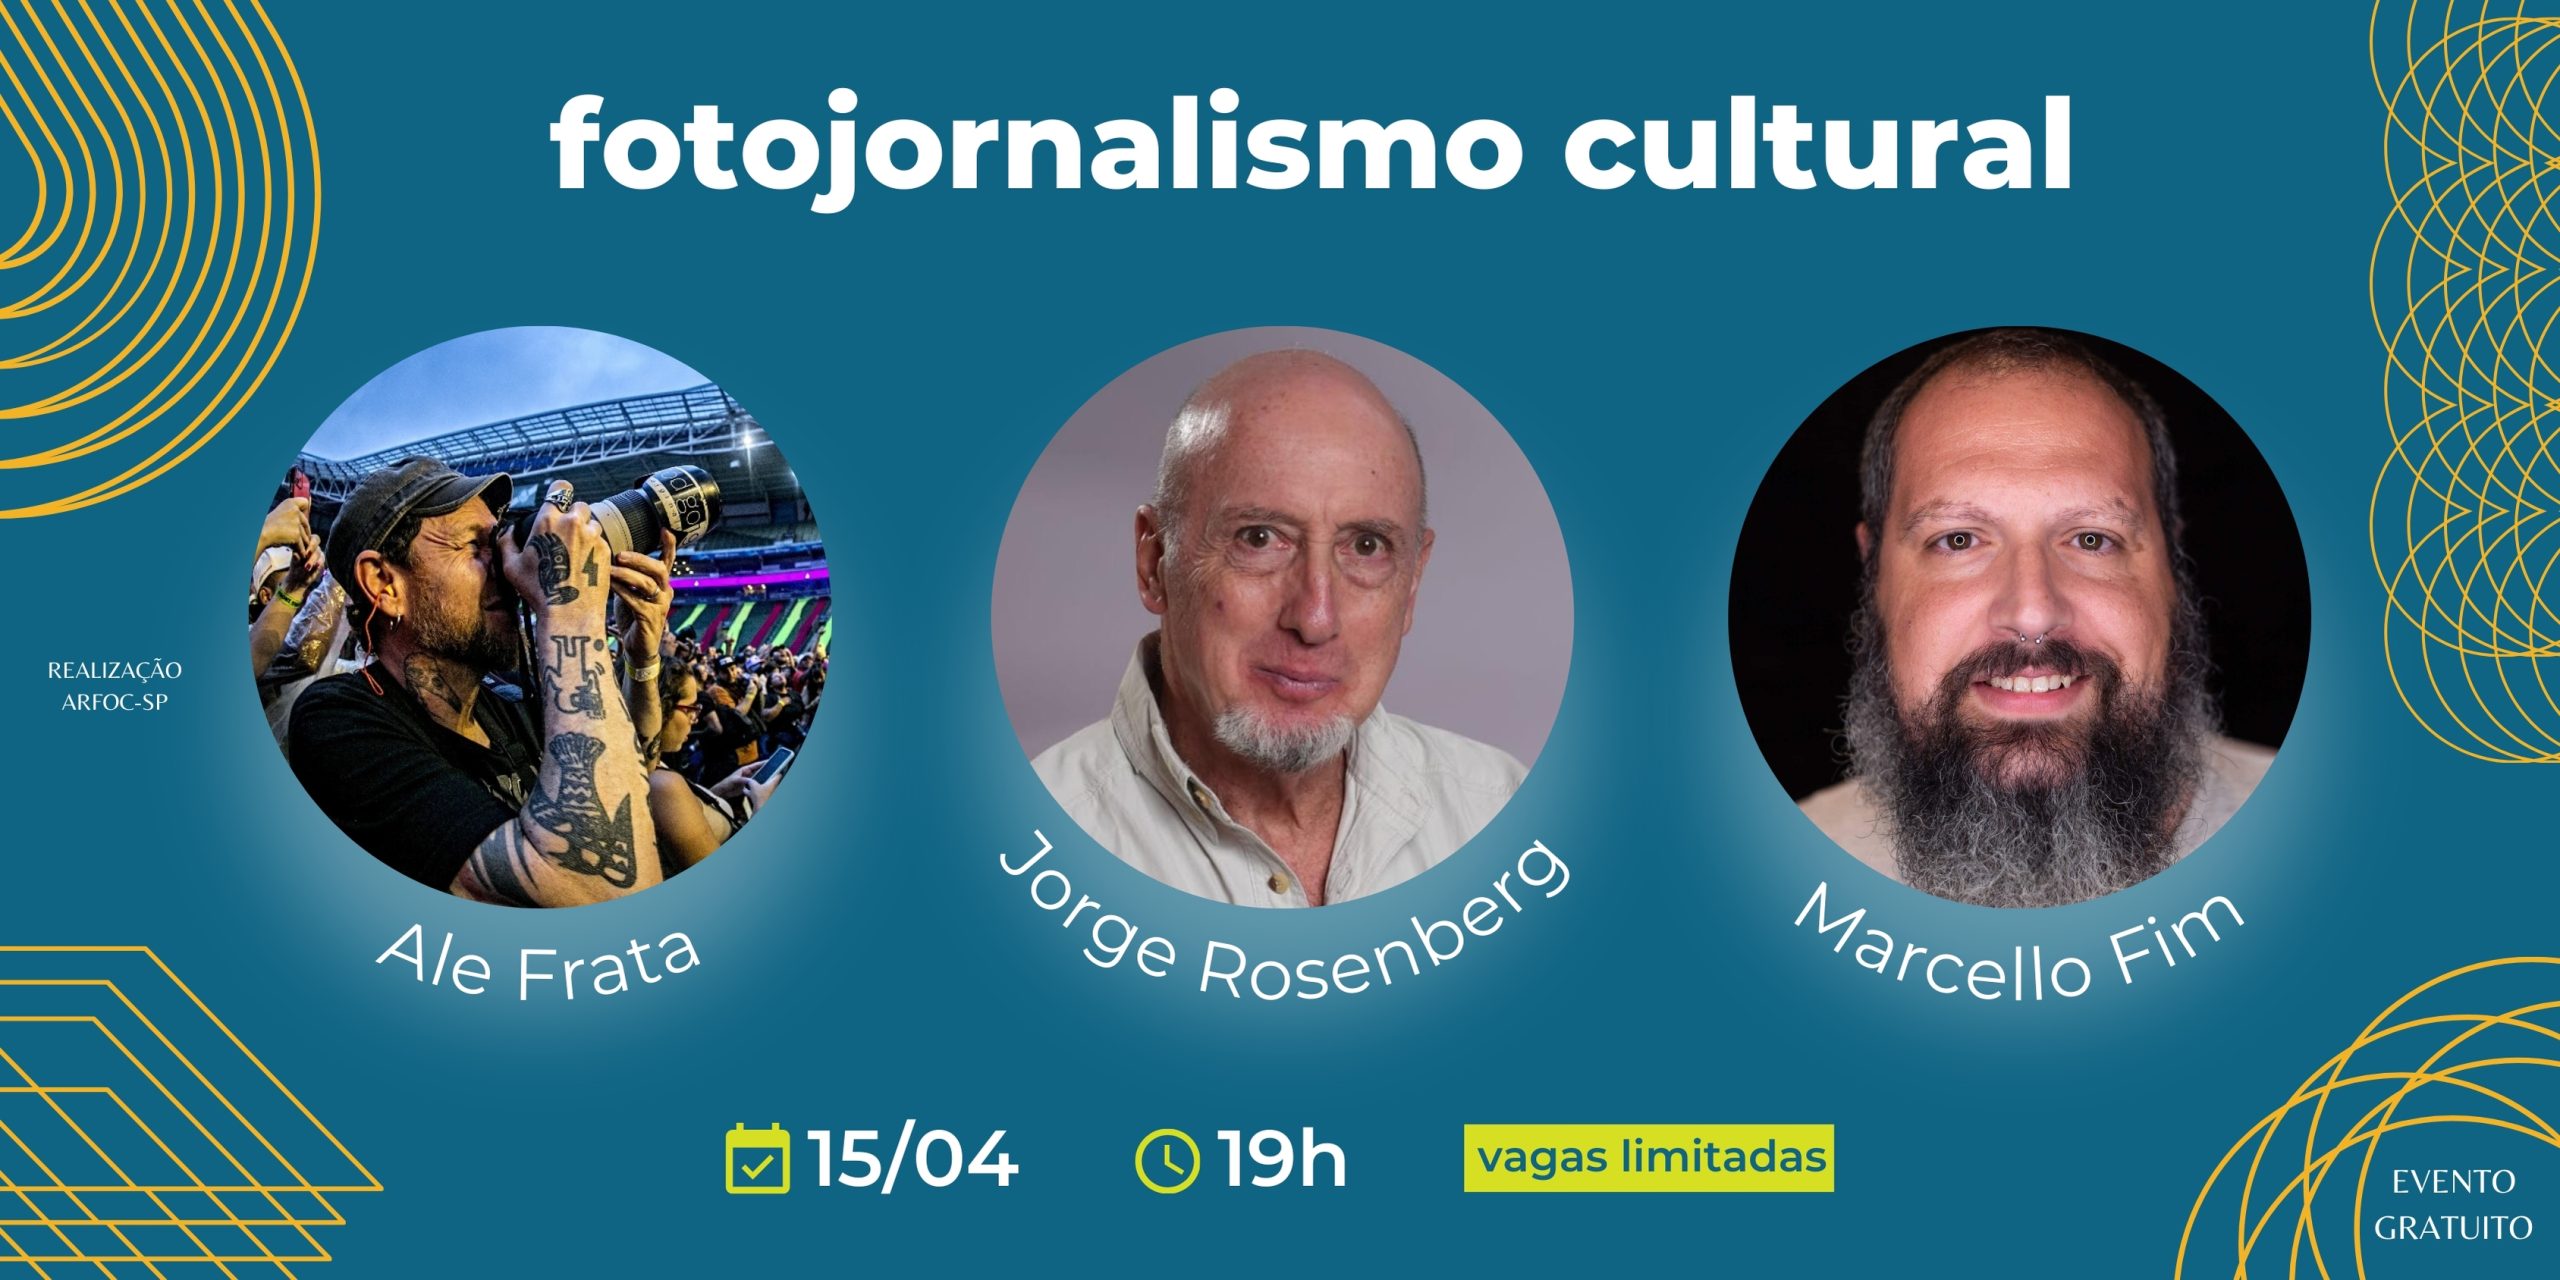 Bate papo sobre Fotojornalismo Cultural com Ale Frata, Jorge Rosenberg e Marcello Fim